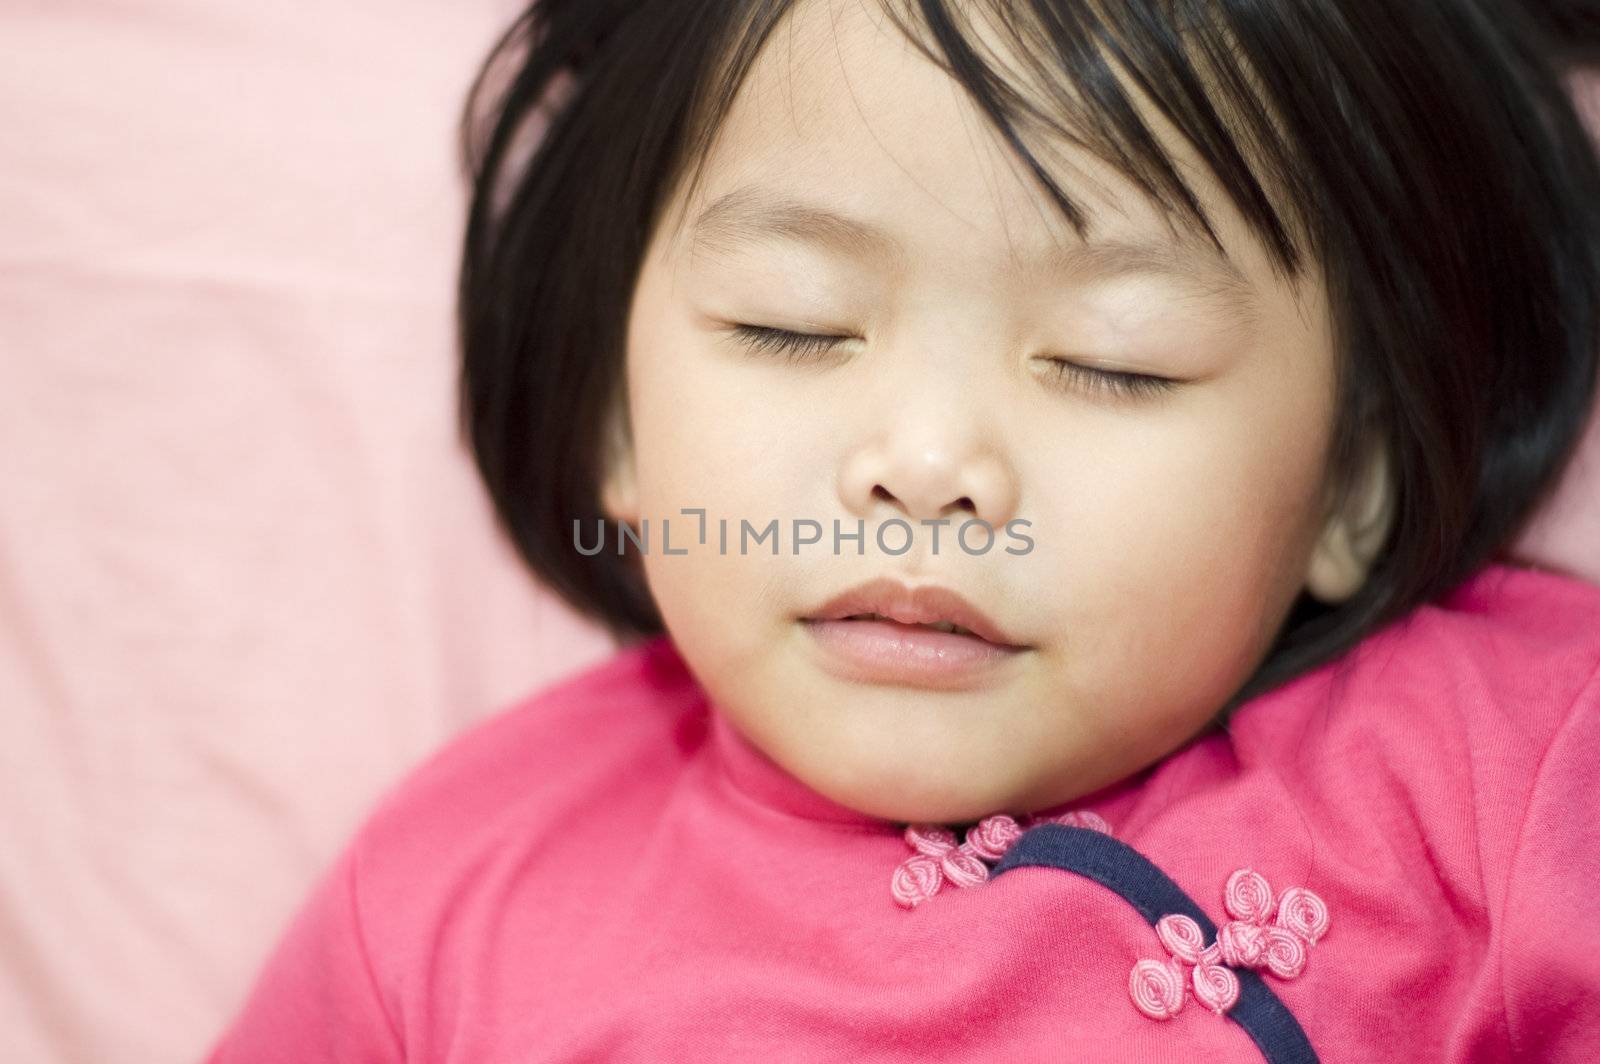 4 years old Asian girl sleeping 